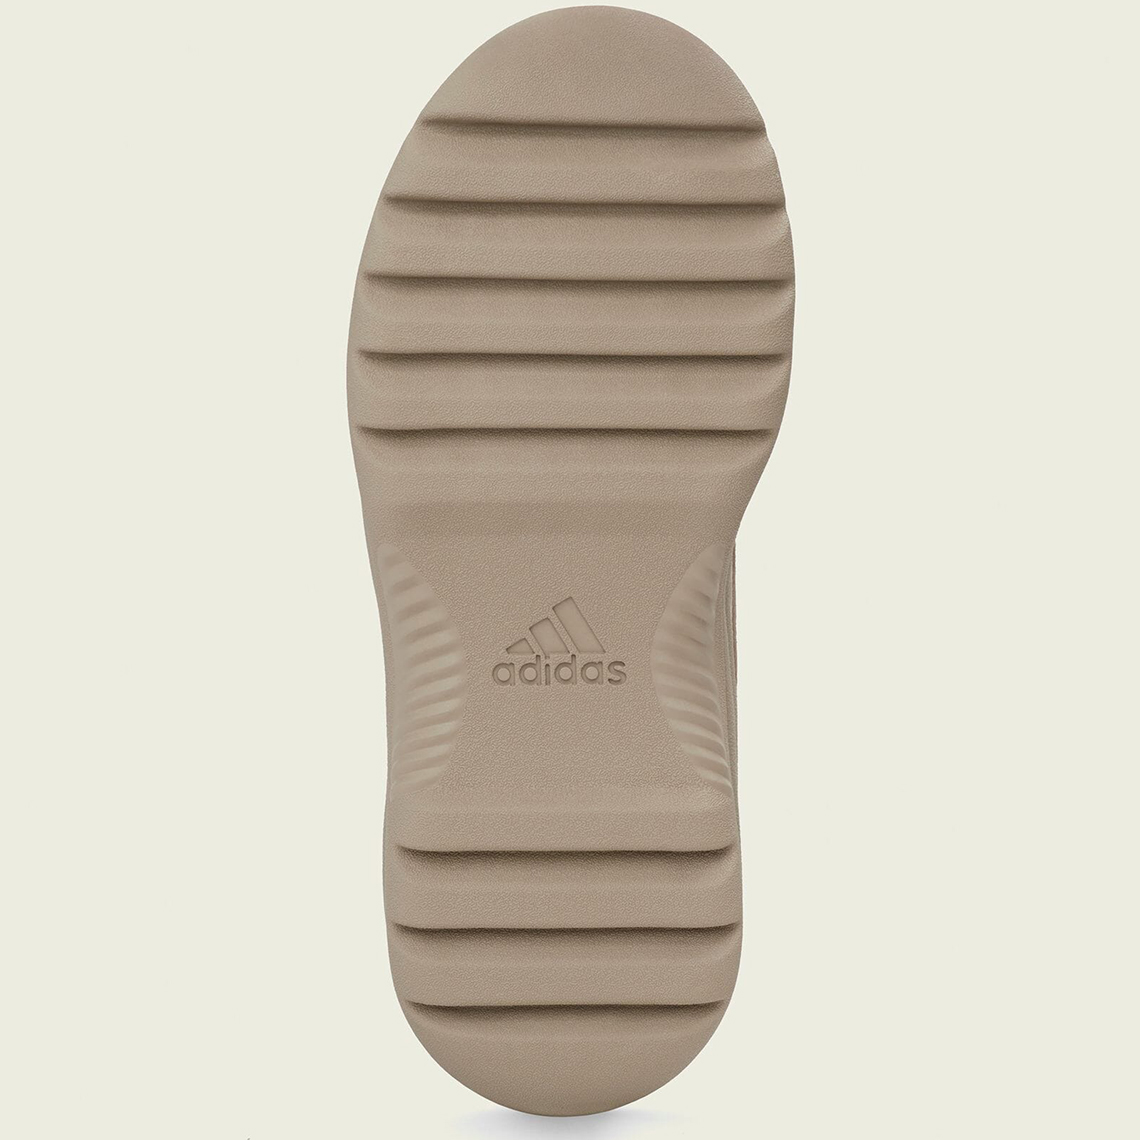 adidas Yeezy Desert Boot Rock EG6462 2022 Release Date 